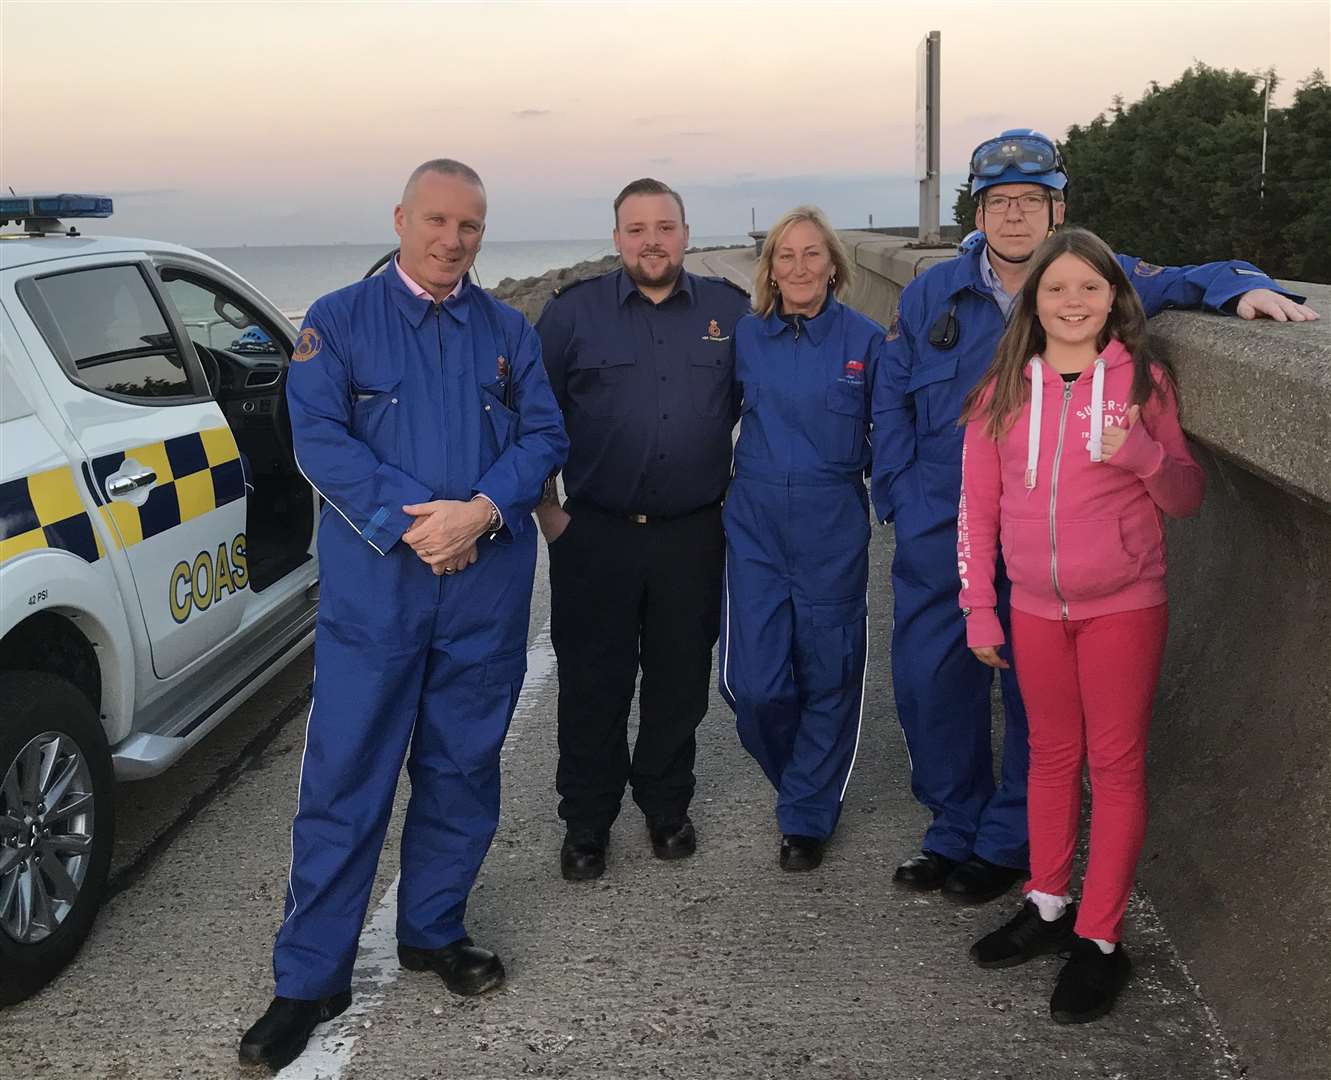 Isobel Osborne, nine, with coastguards and police officers after her find